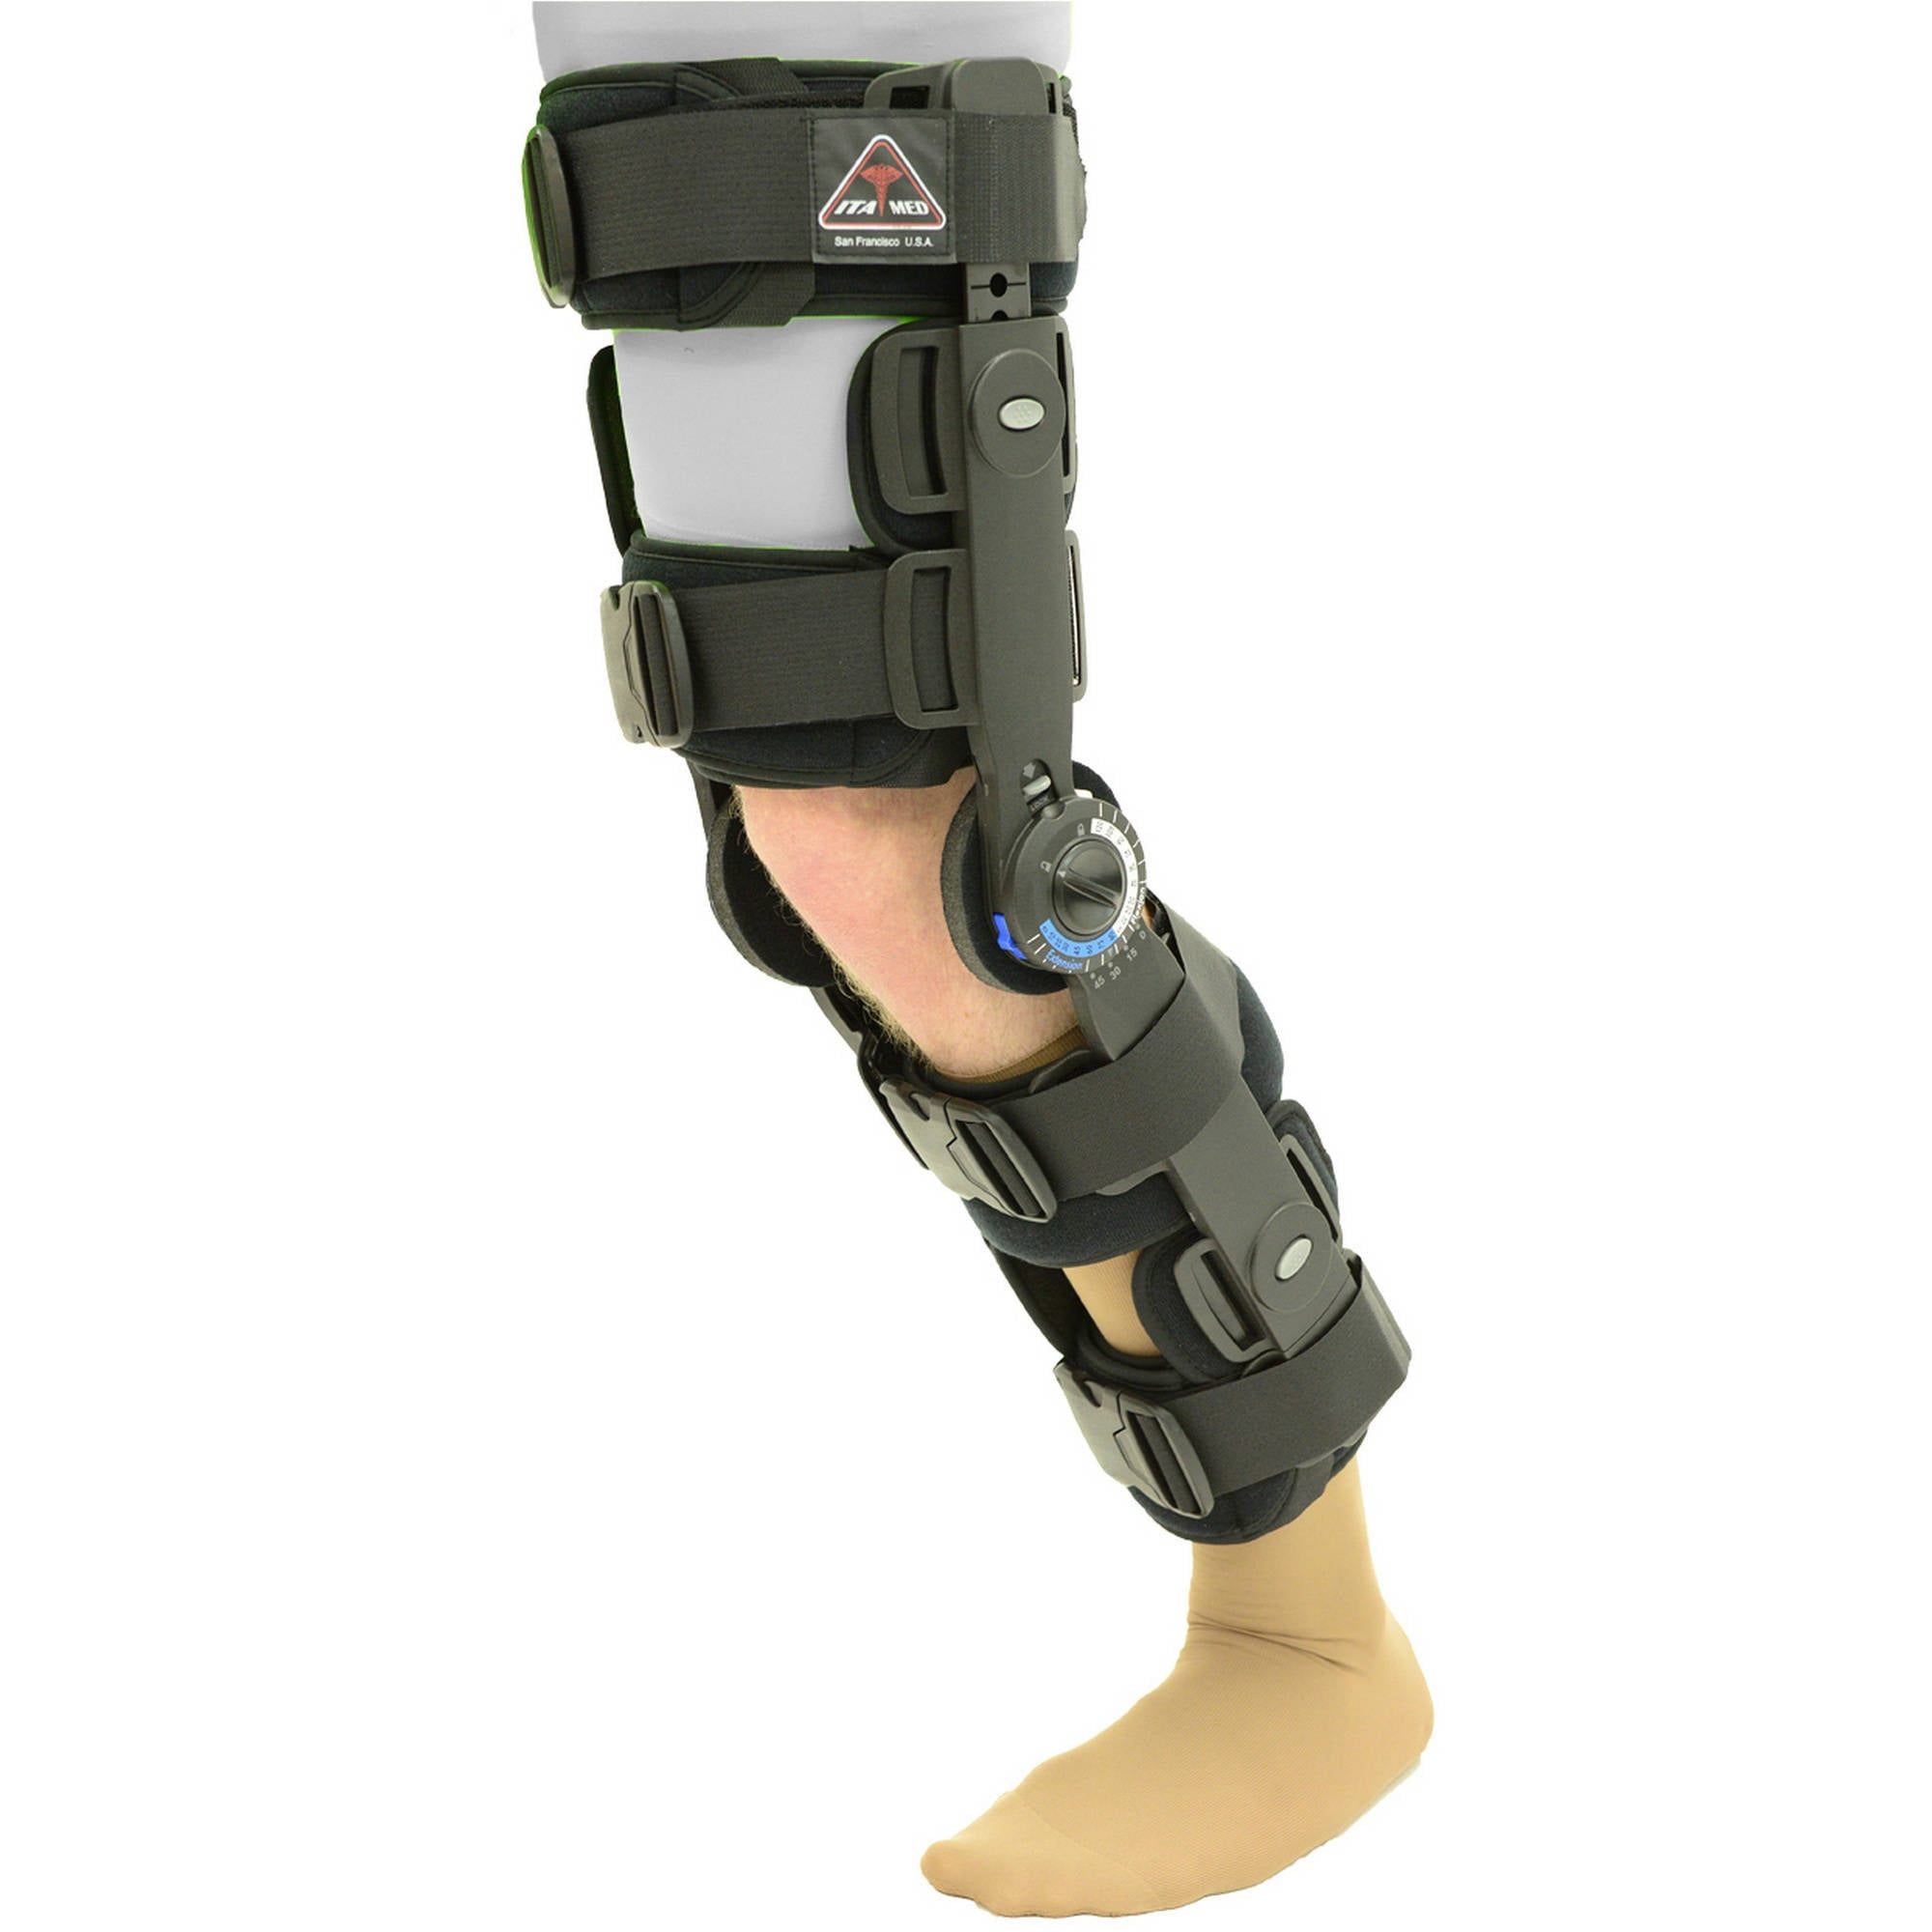 ITA-MED Advanced ROM Post-Op Knee Brace